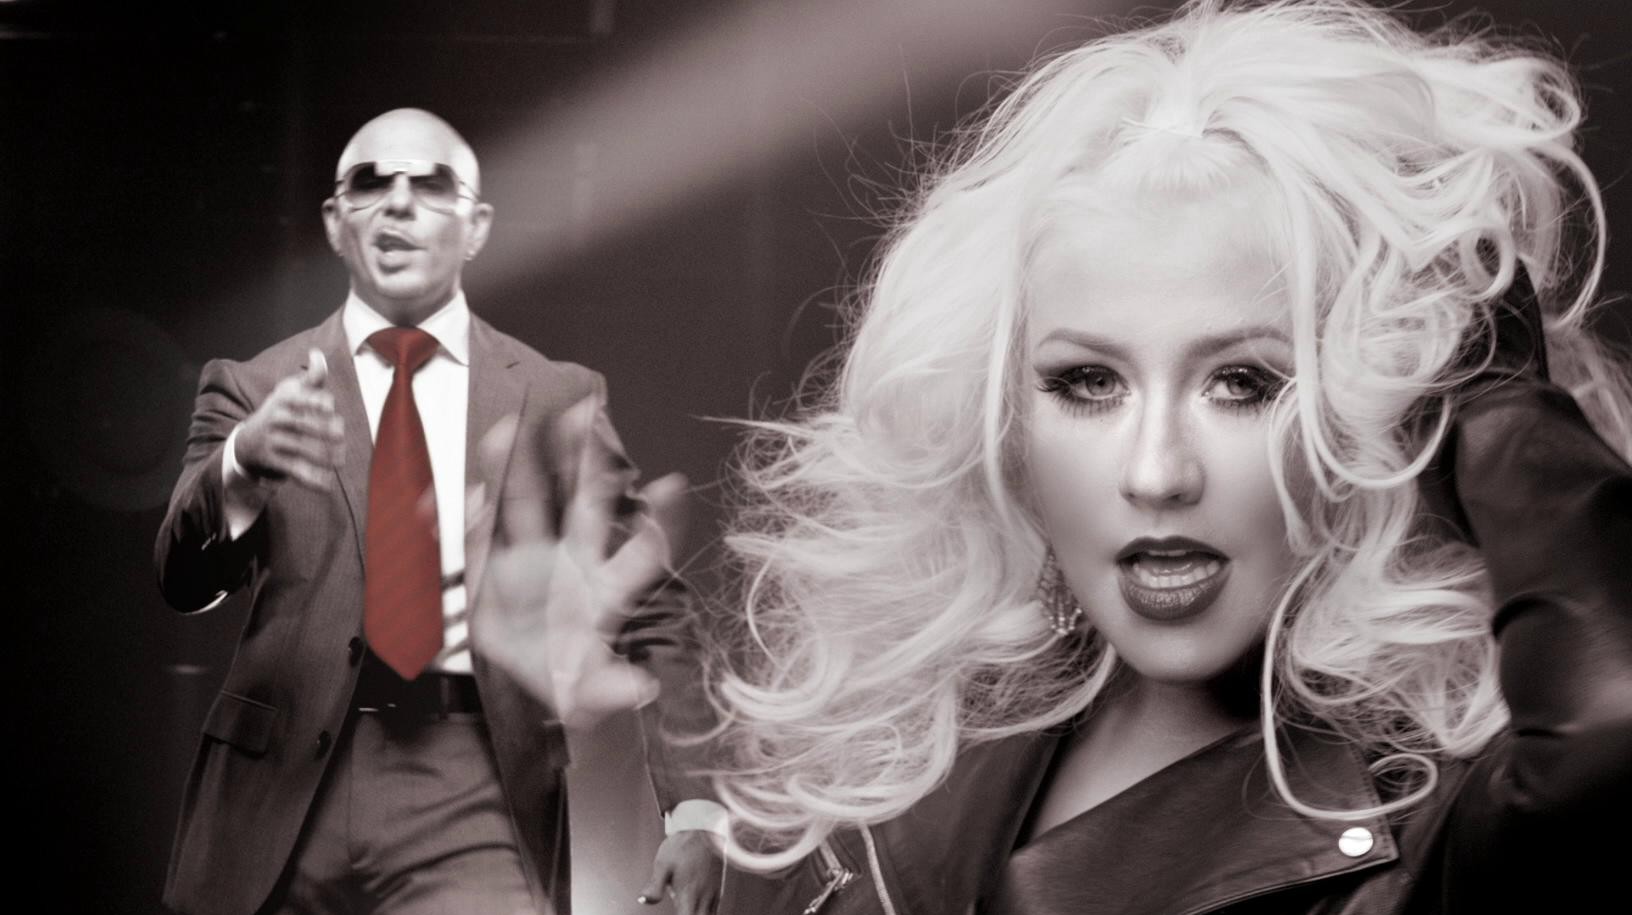 Pitbull – Feel This Moment ft. Christina Aguilera